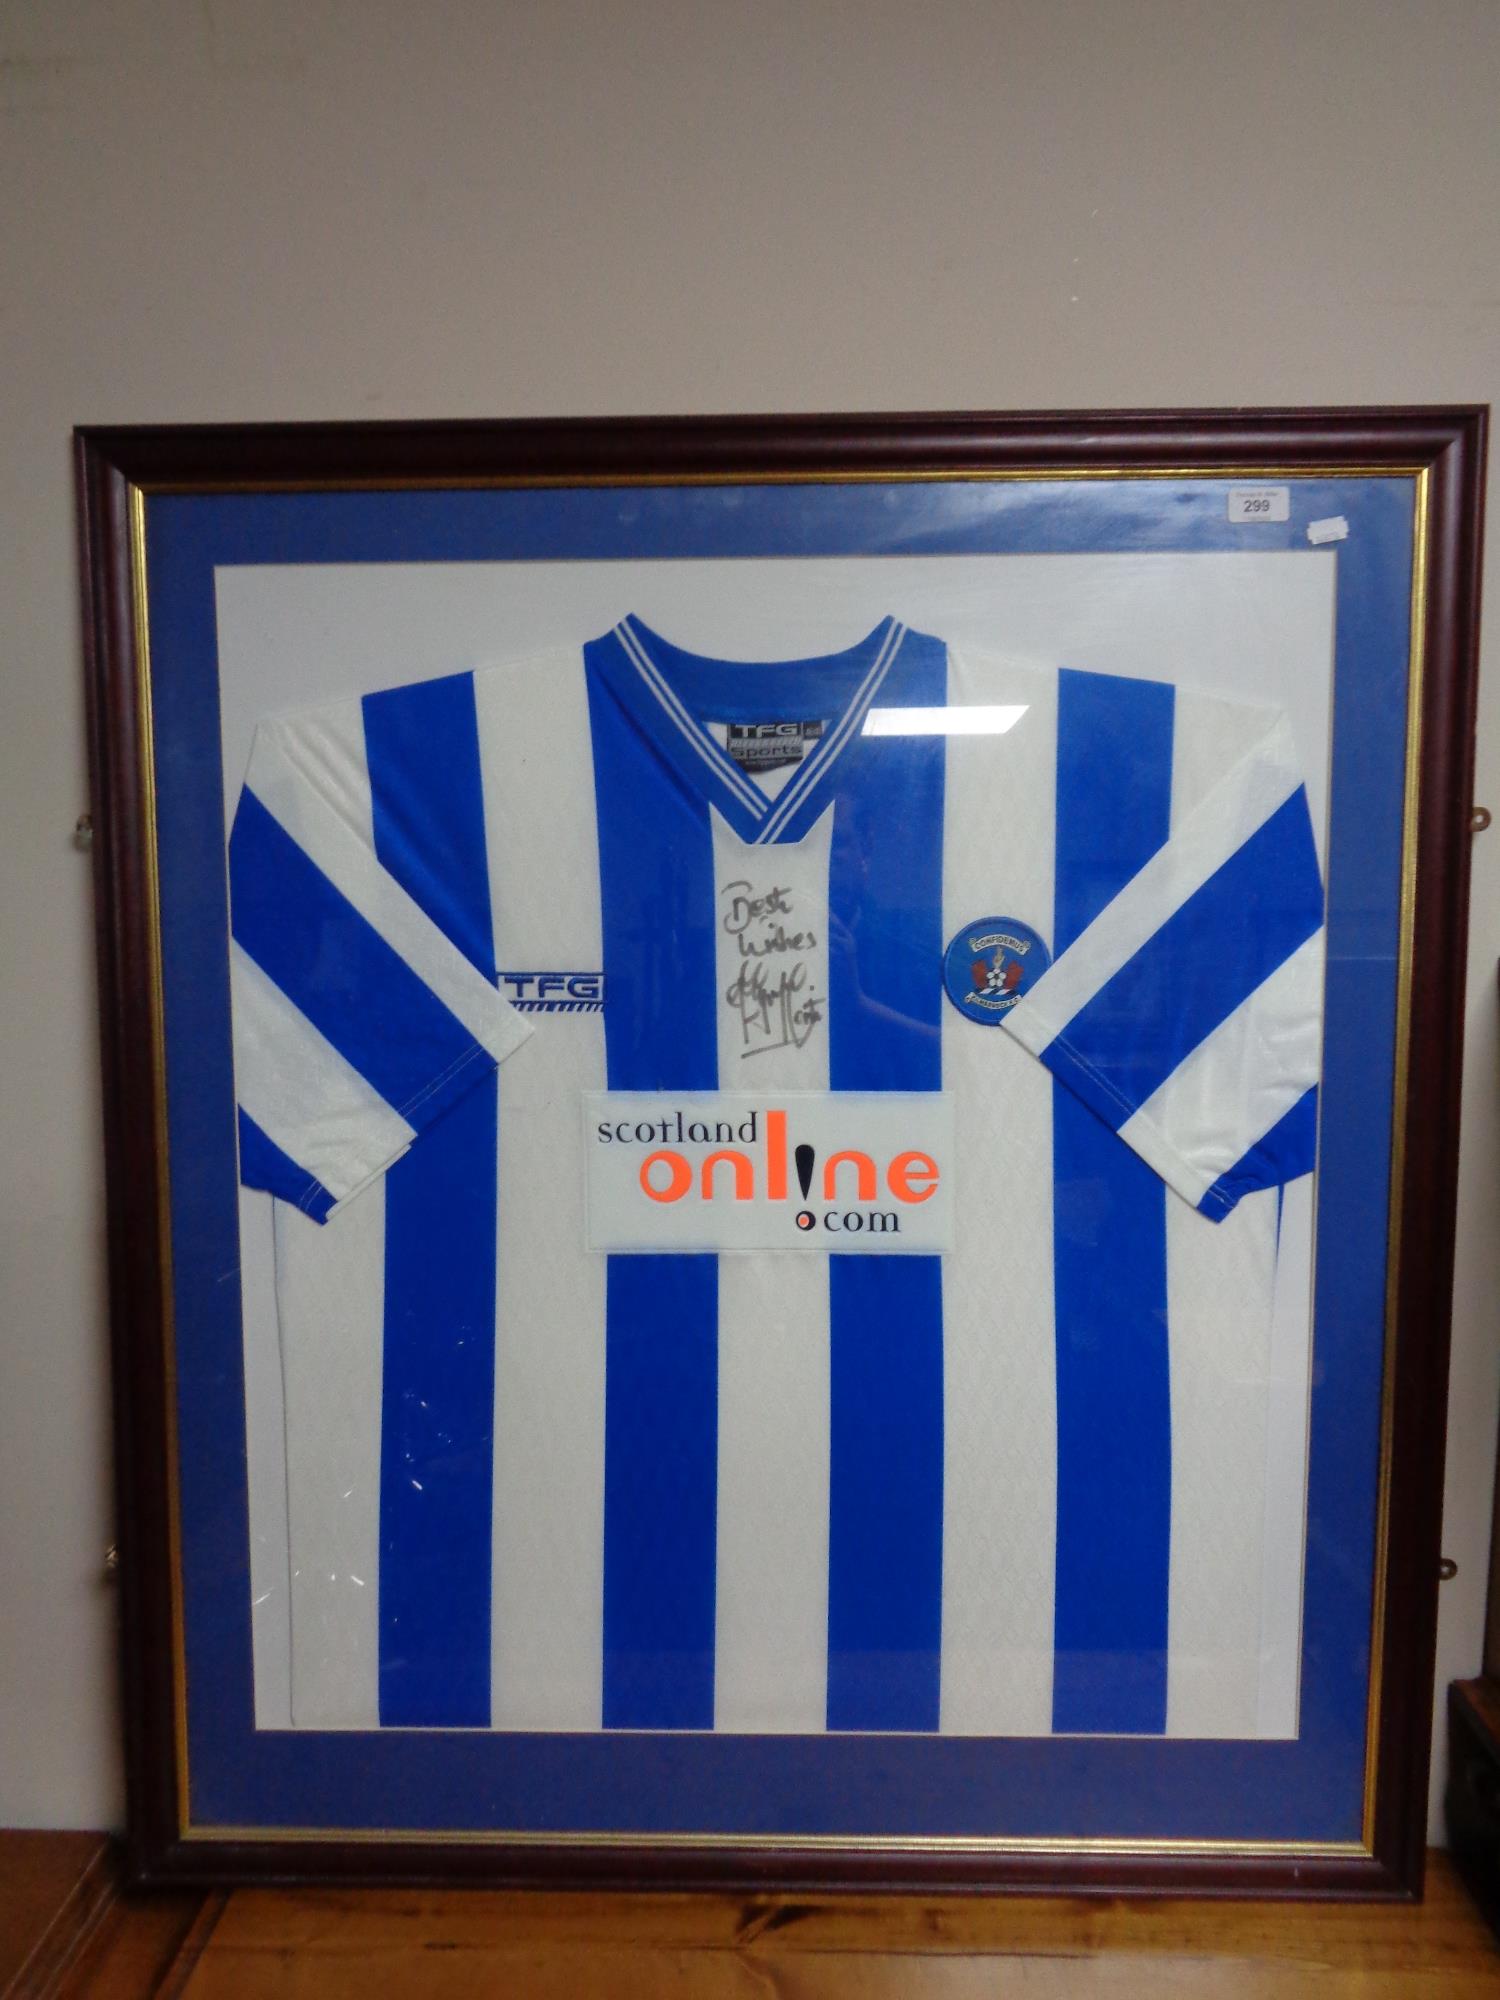 A framed Kilmarnock FC football top with signature